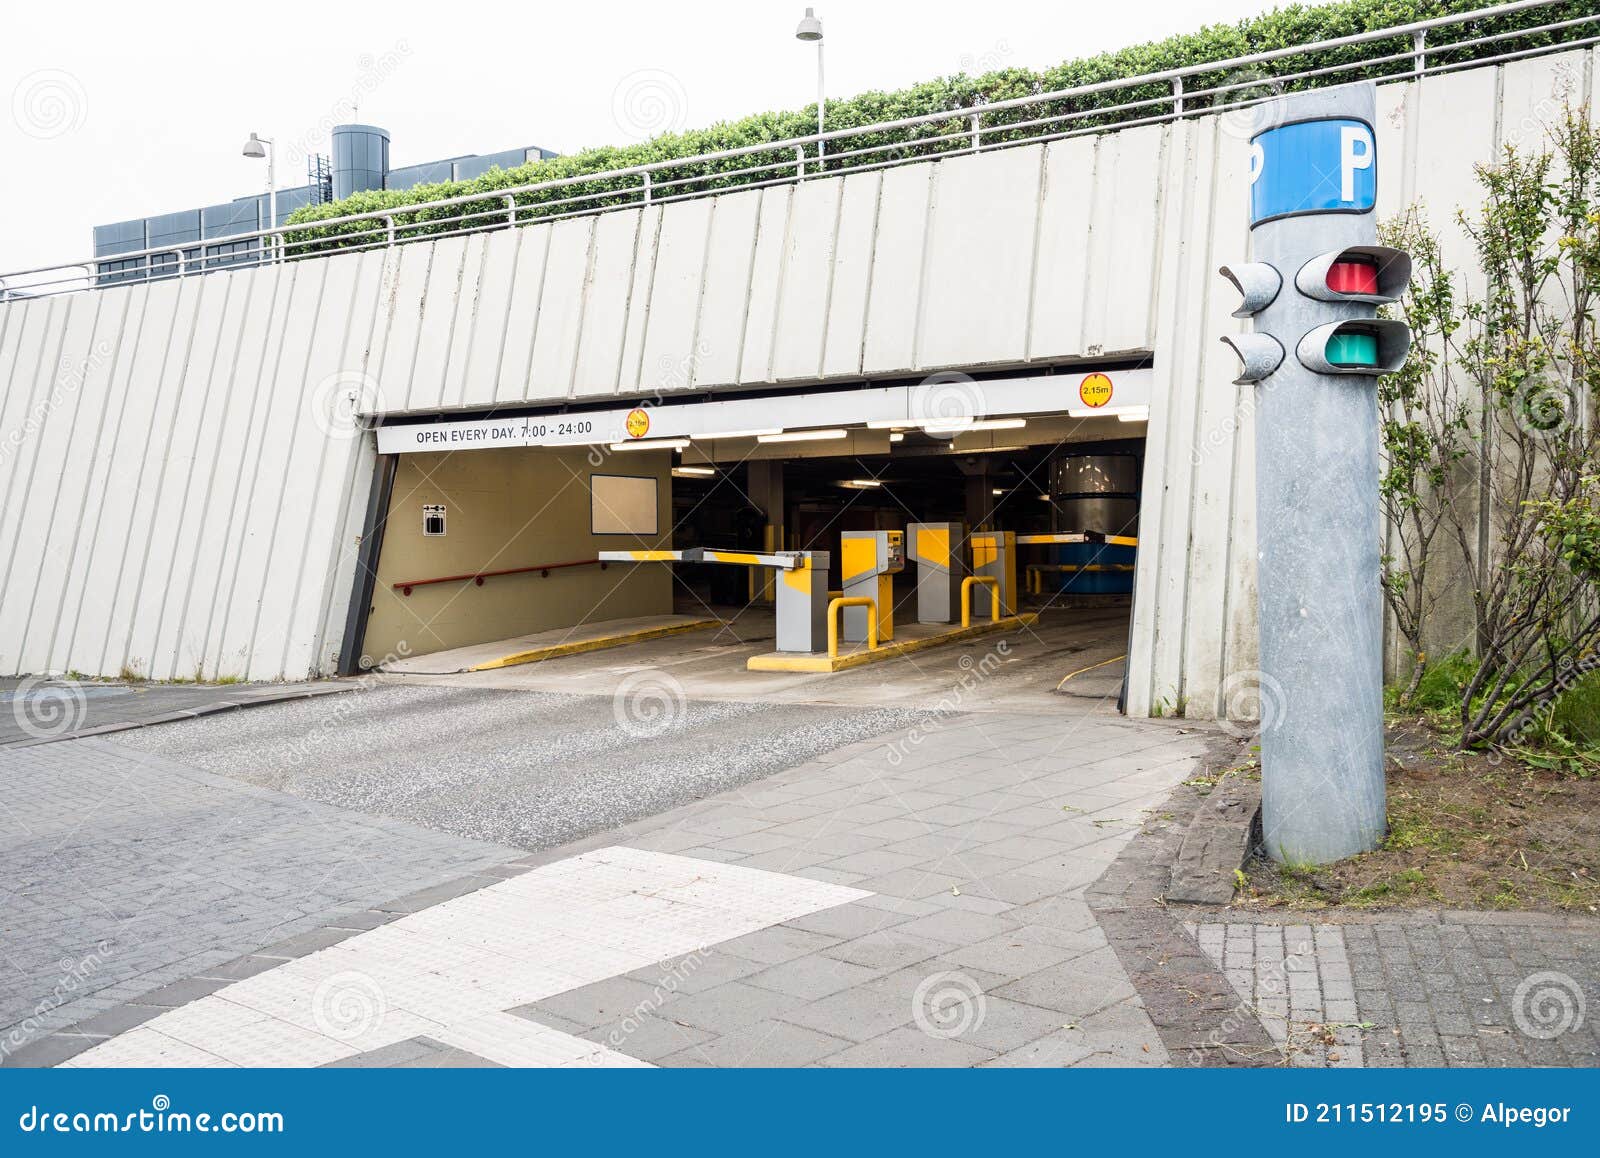 Street Level Entrance of Multy-storey Car Park Editorial Image - Image ...